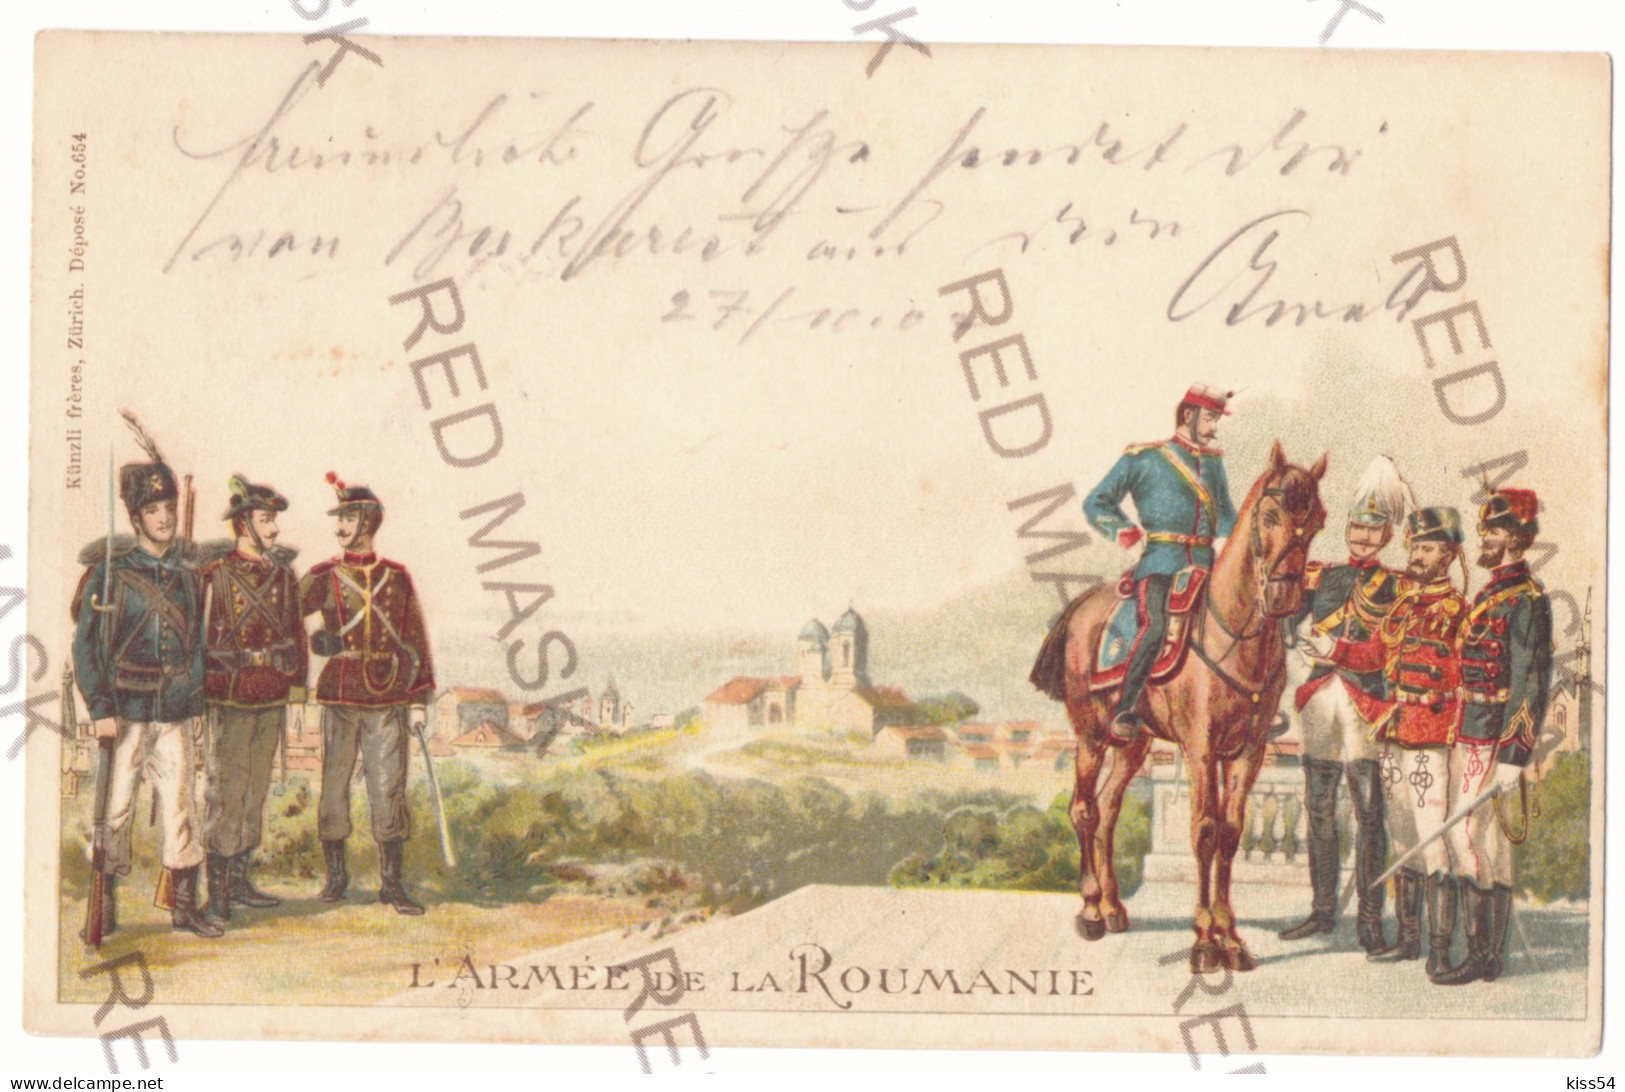 RO 69 - 18590 Romanian Army, Litho, Romania - Old Postcard - Used - 1902 - Rumänien